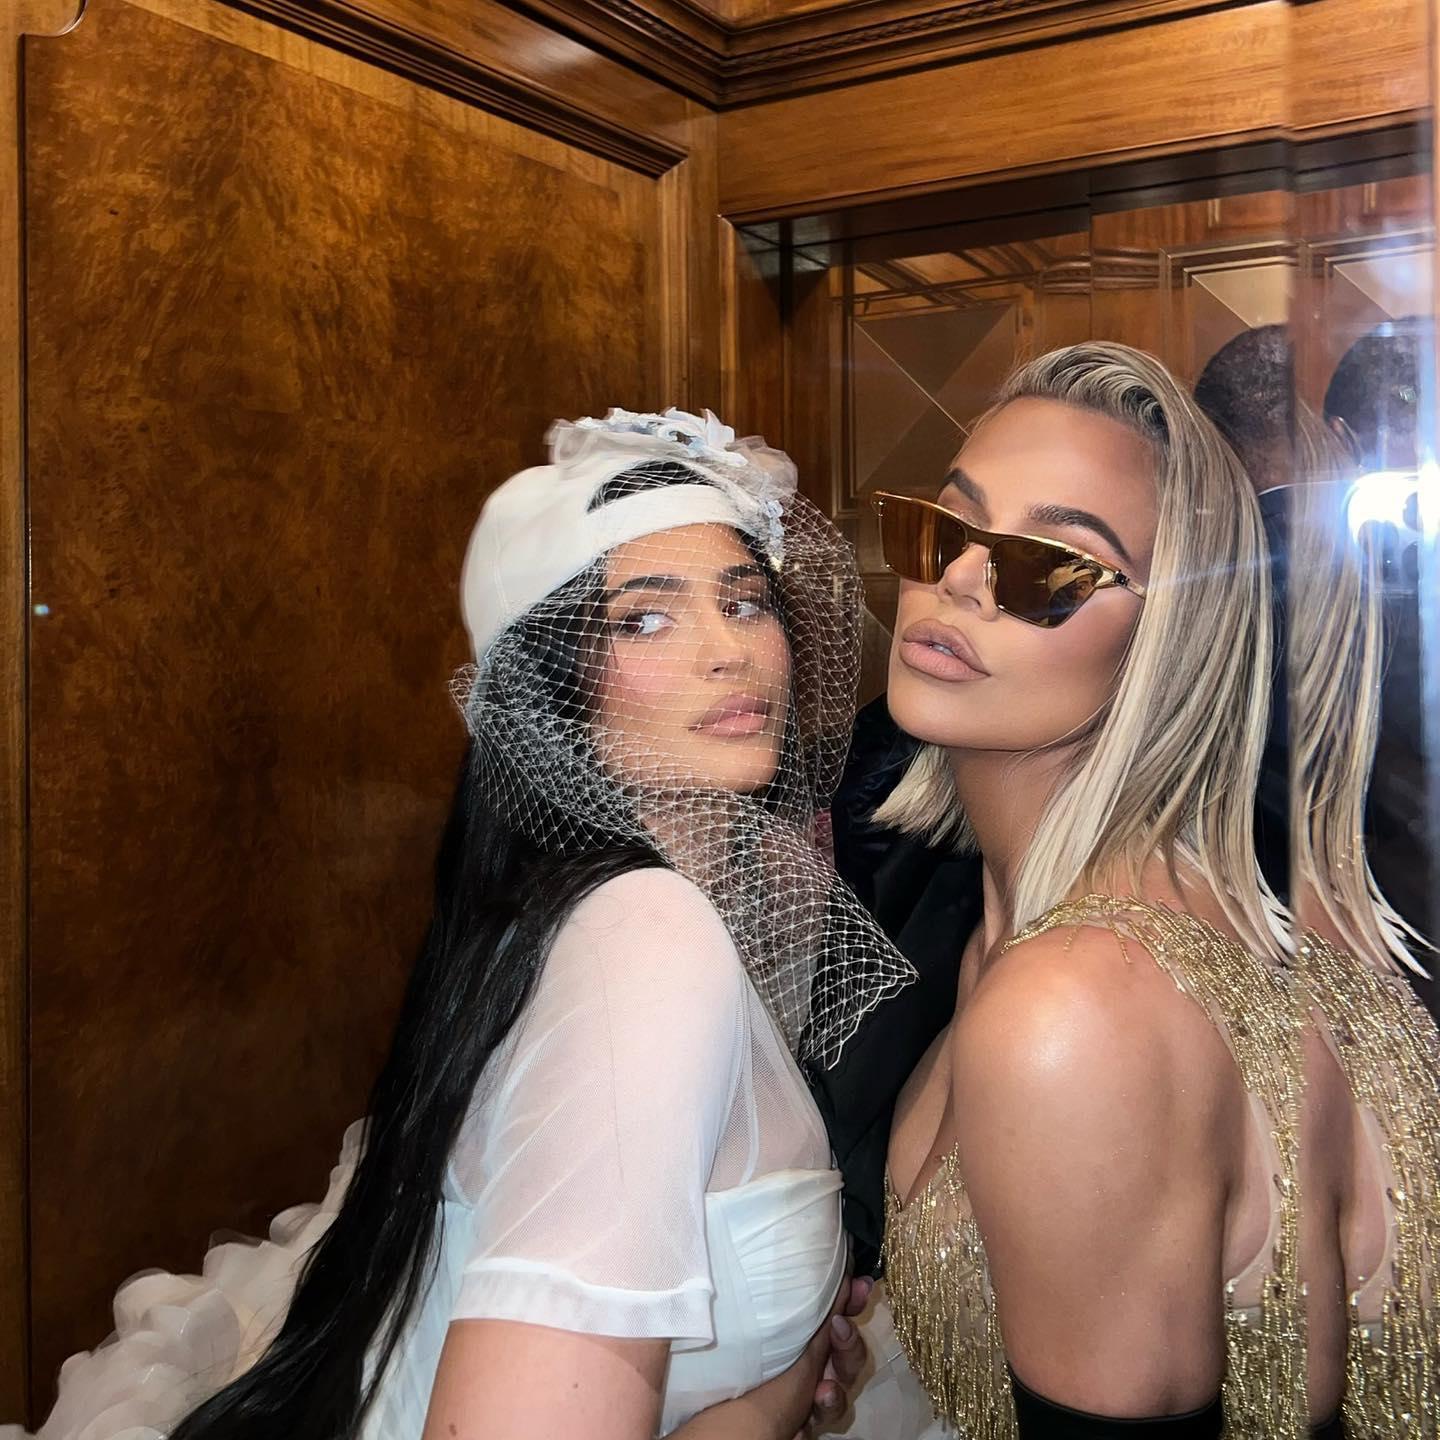 Khloe Kardashian and Kylie Jenner